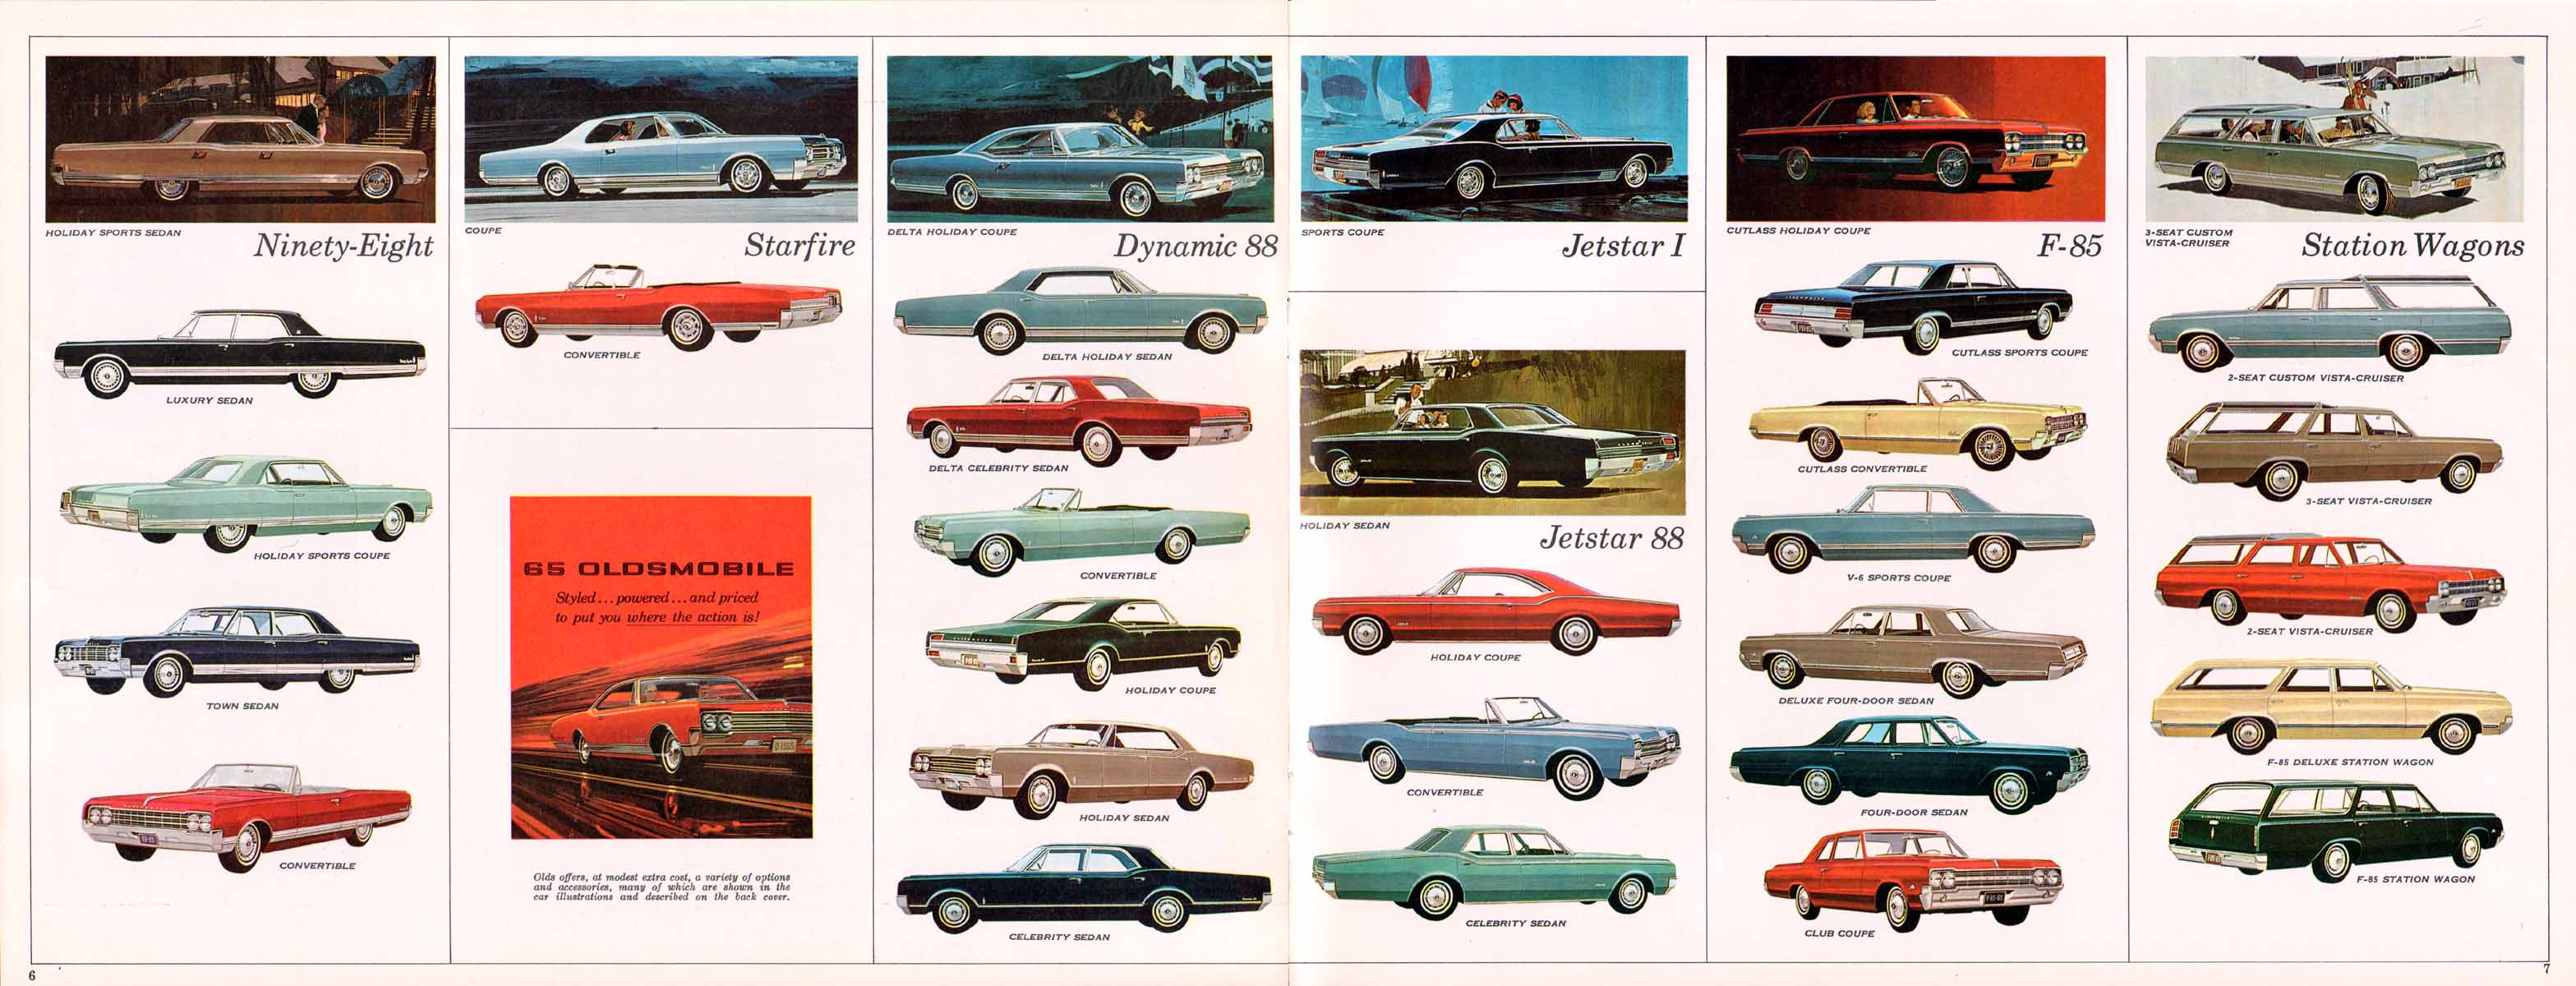 1965 Oldsmobile Wagons Folder Page 4